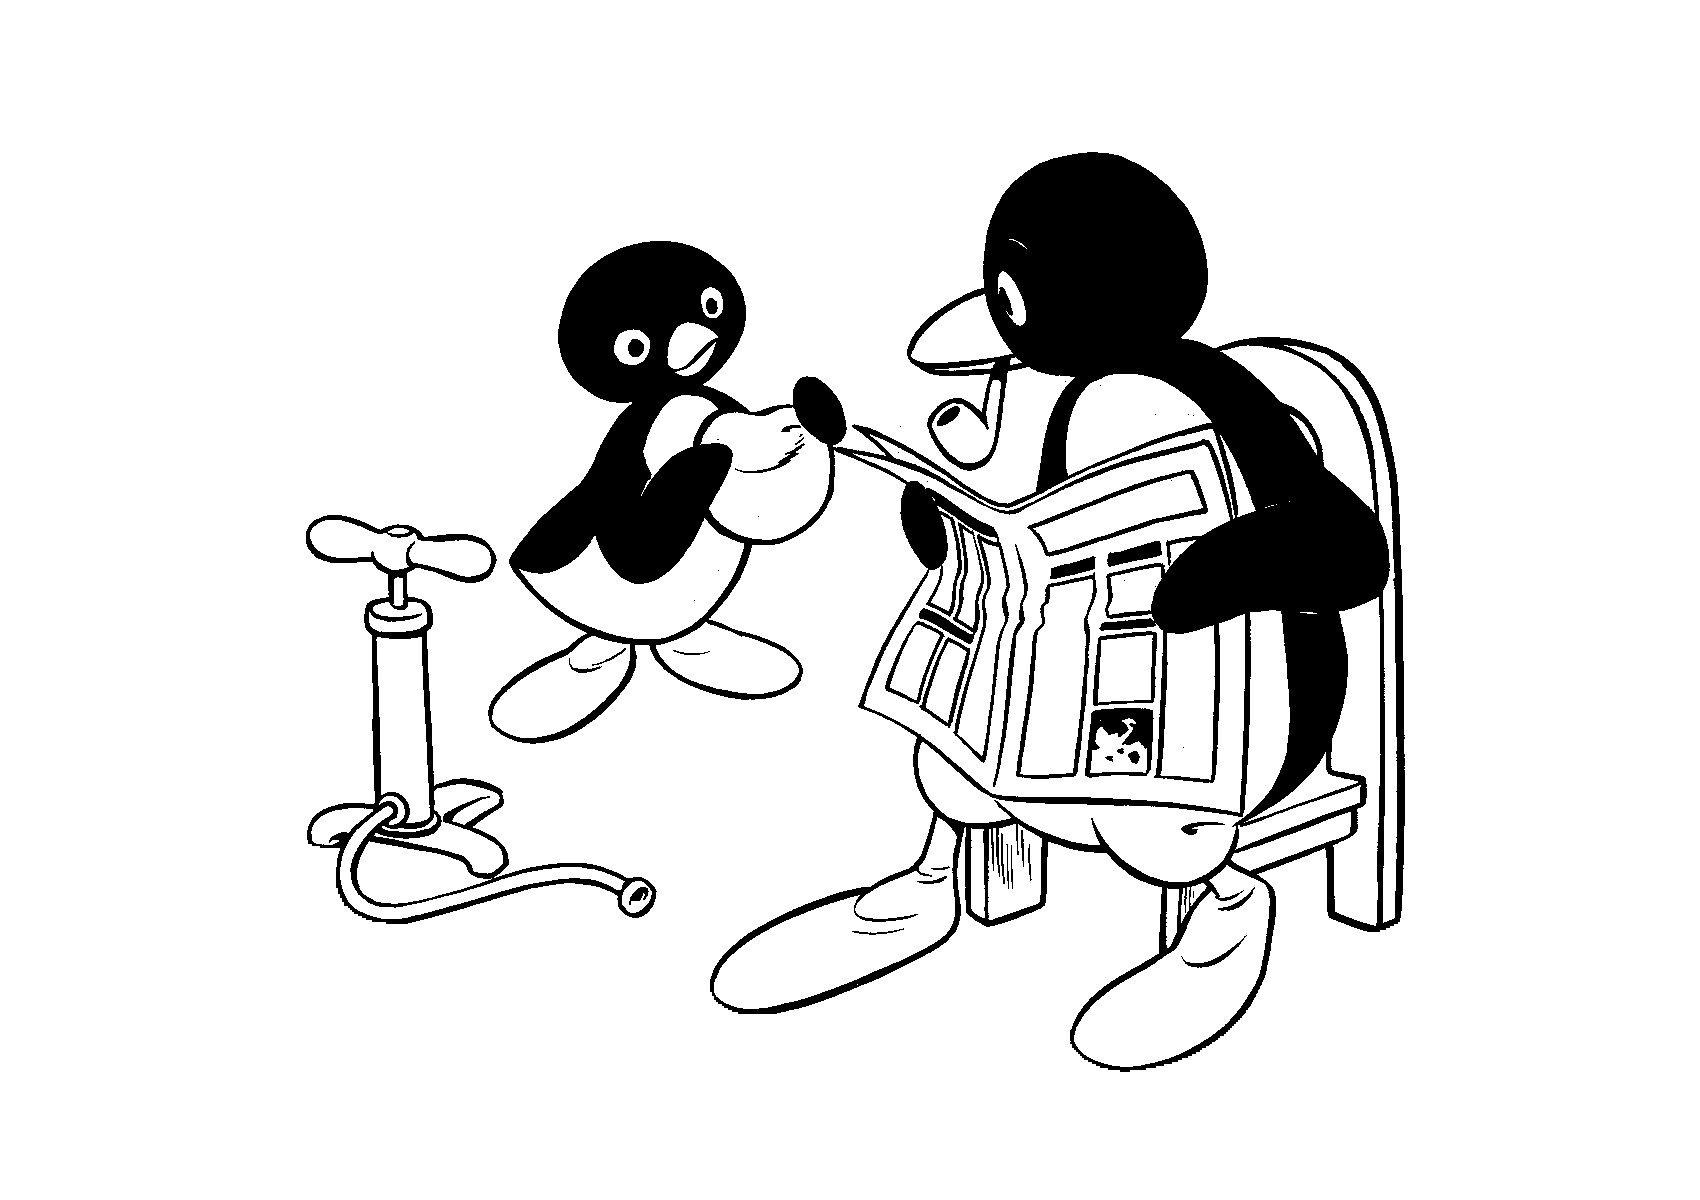 Pingu coloring pages